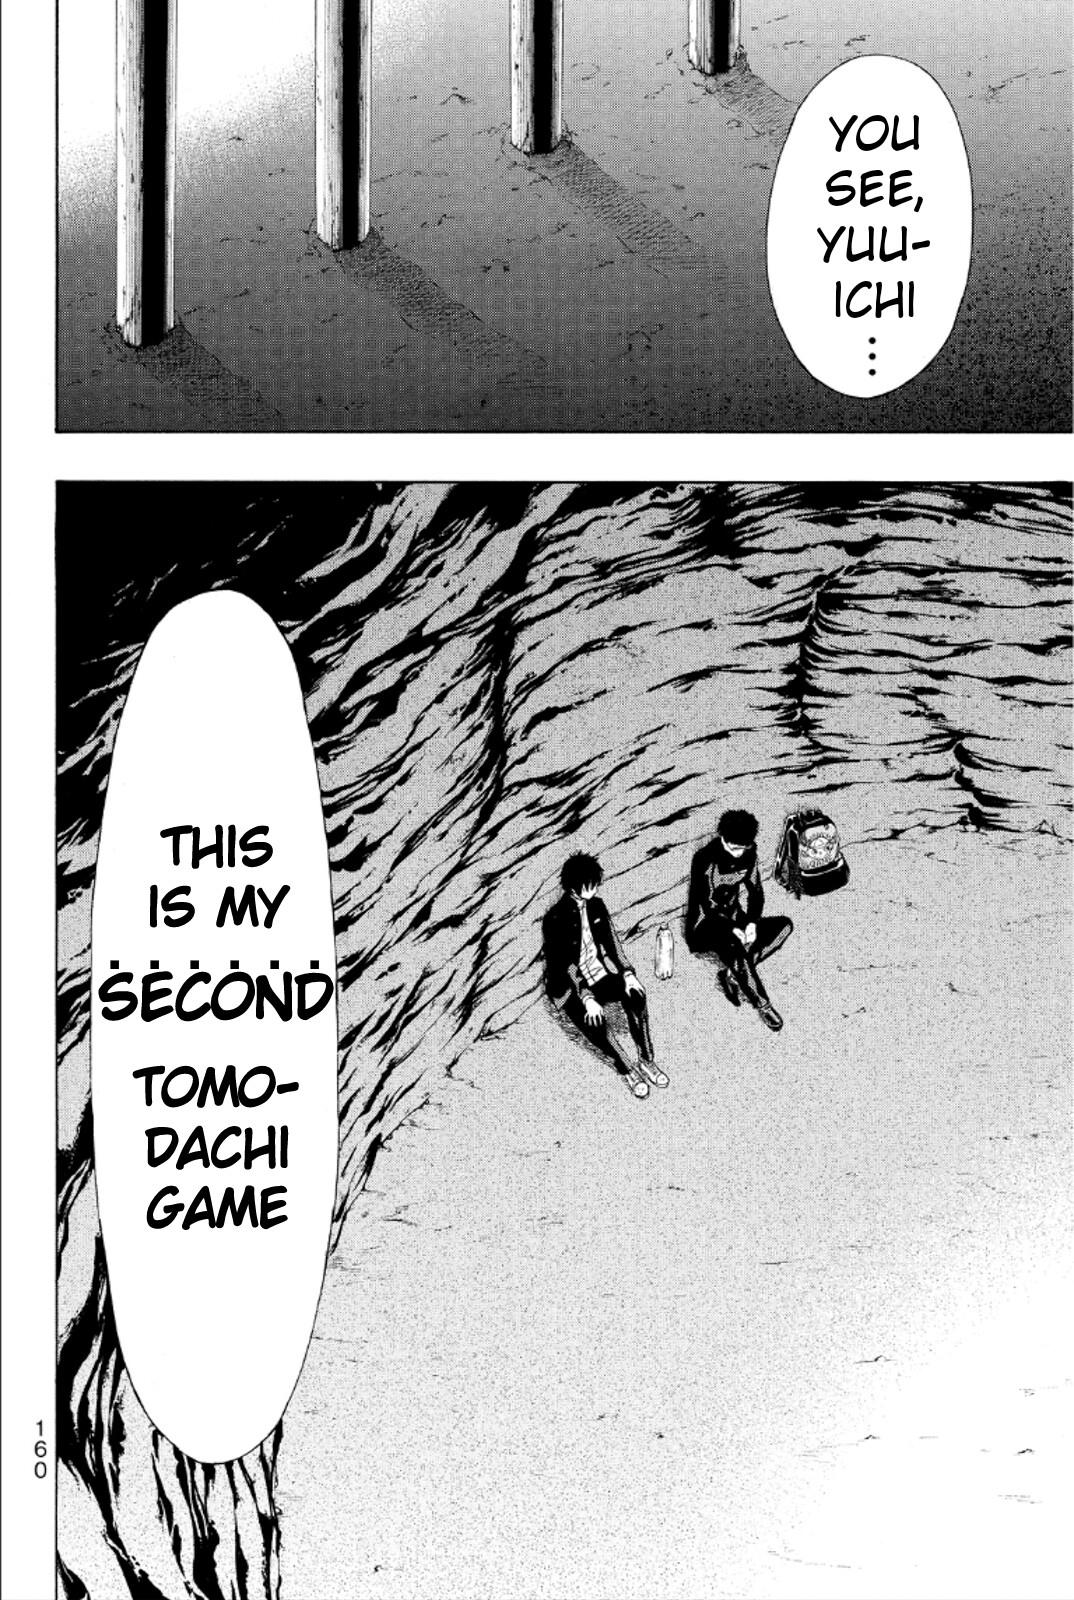 Tomodachi game 11